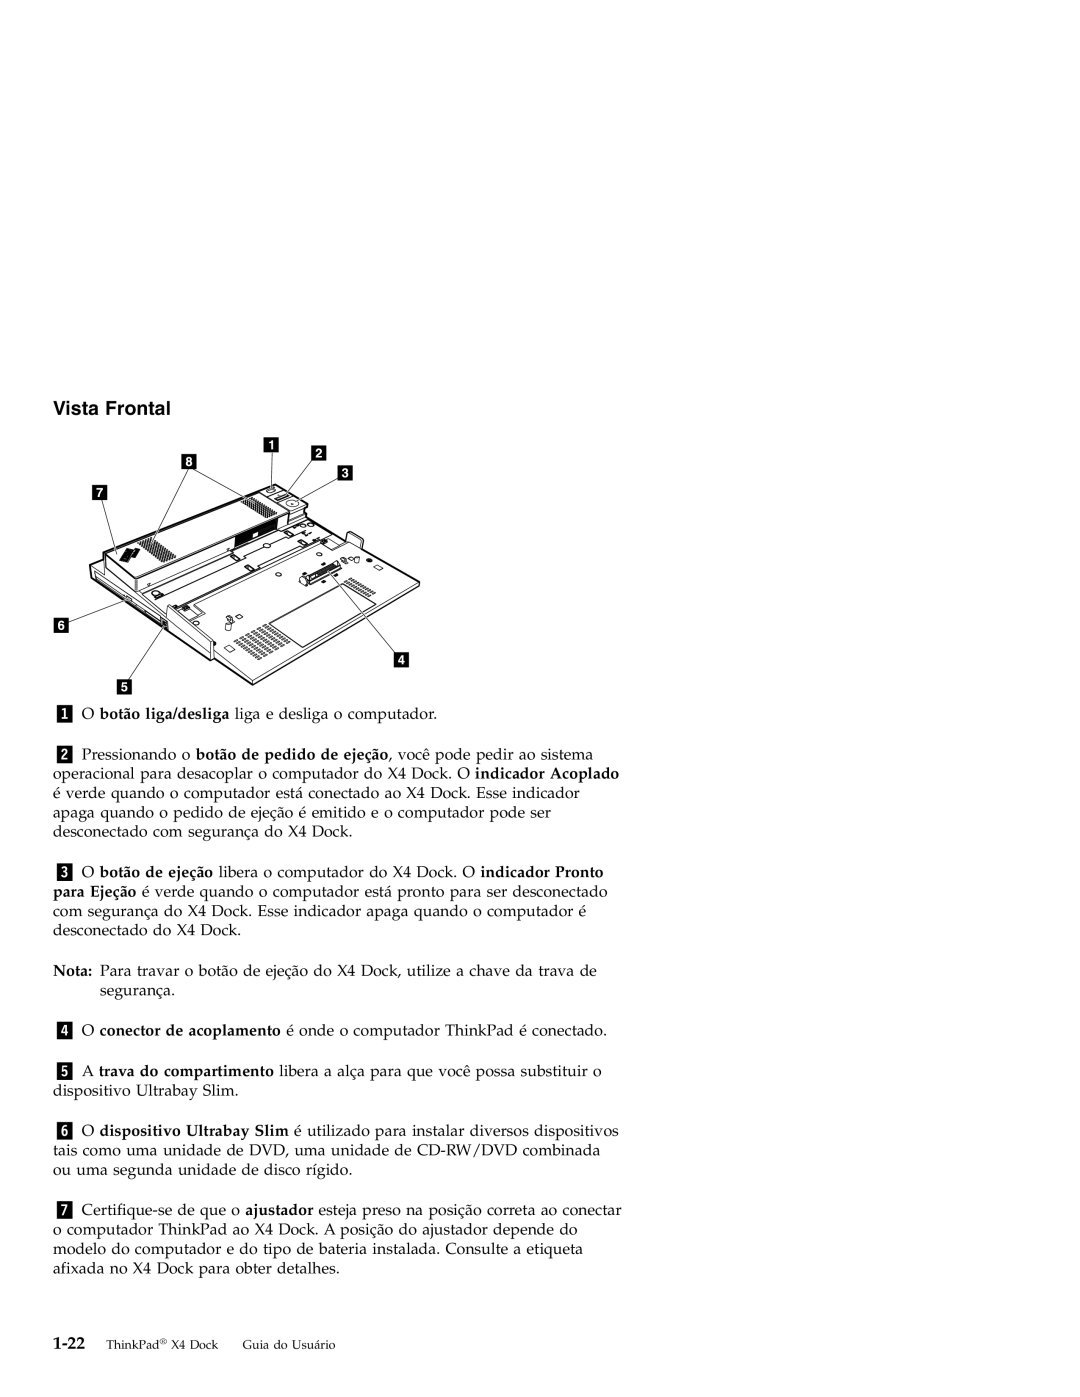 IBM X4 manual Vista Frontal 